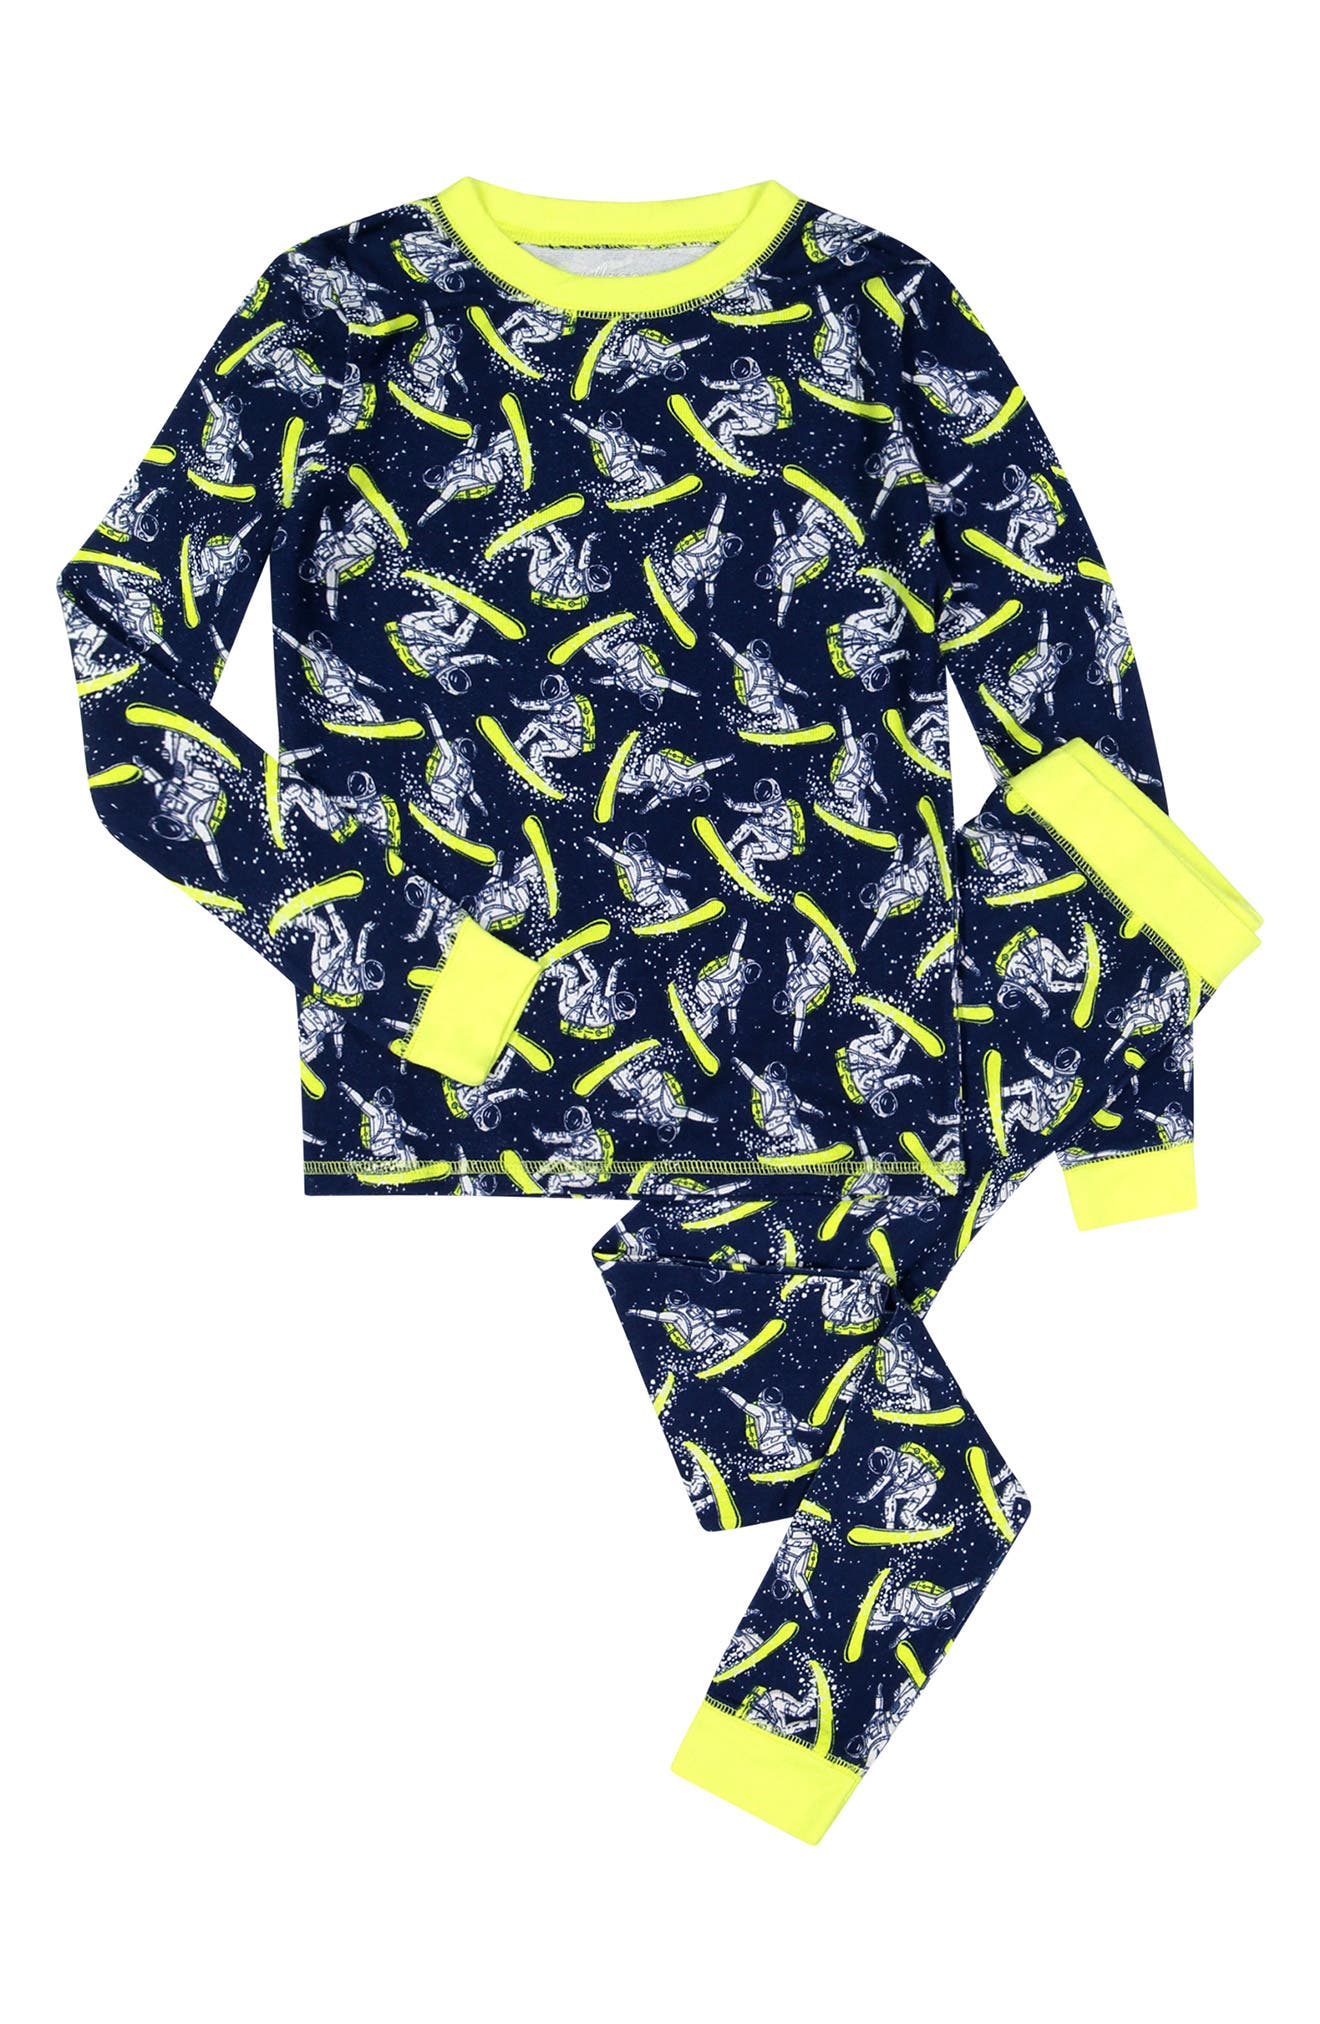 Evelin BEE Toddler Boys Girls Hooded Bathrobes Soft Pajamas Sleepwear with Belt 2-8 Years 